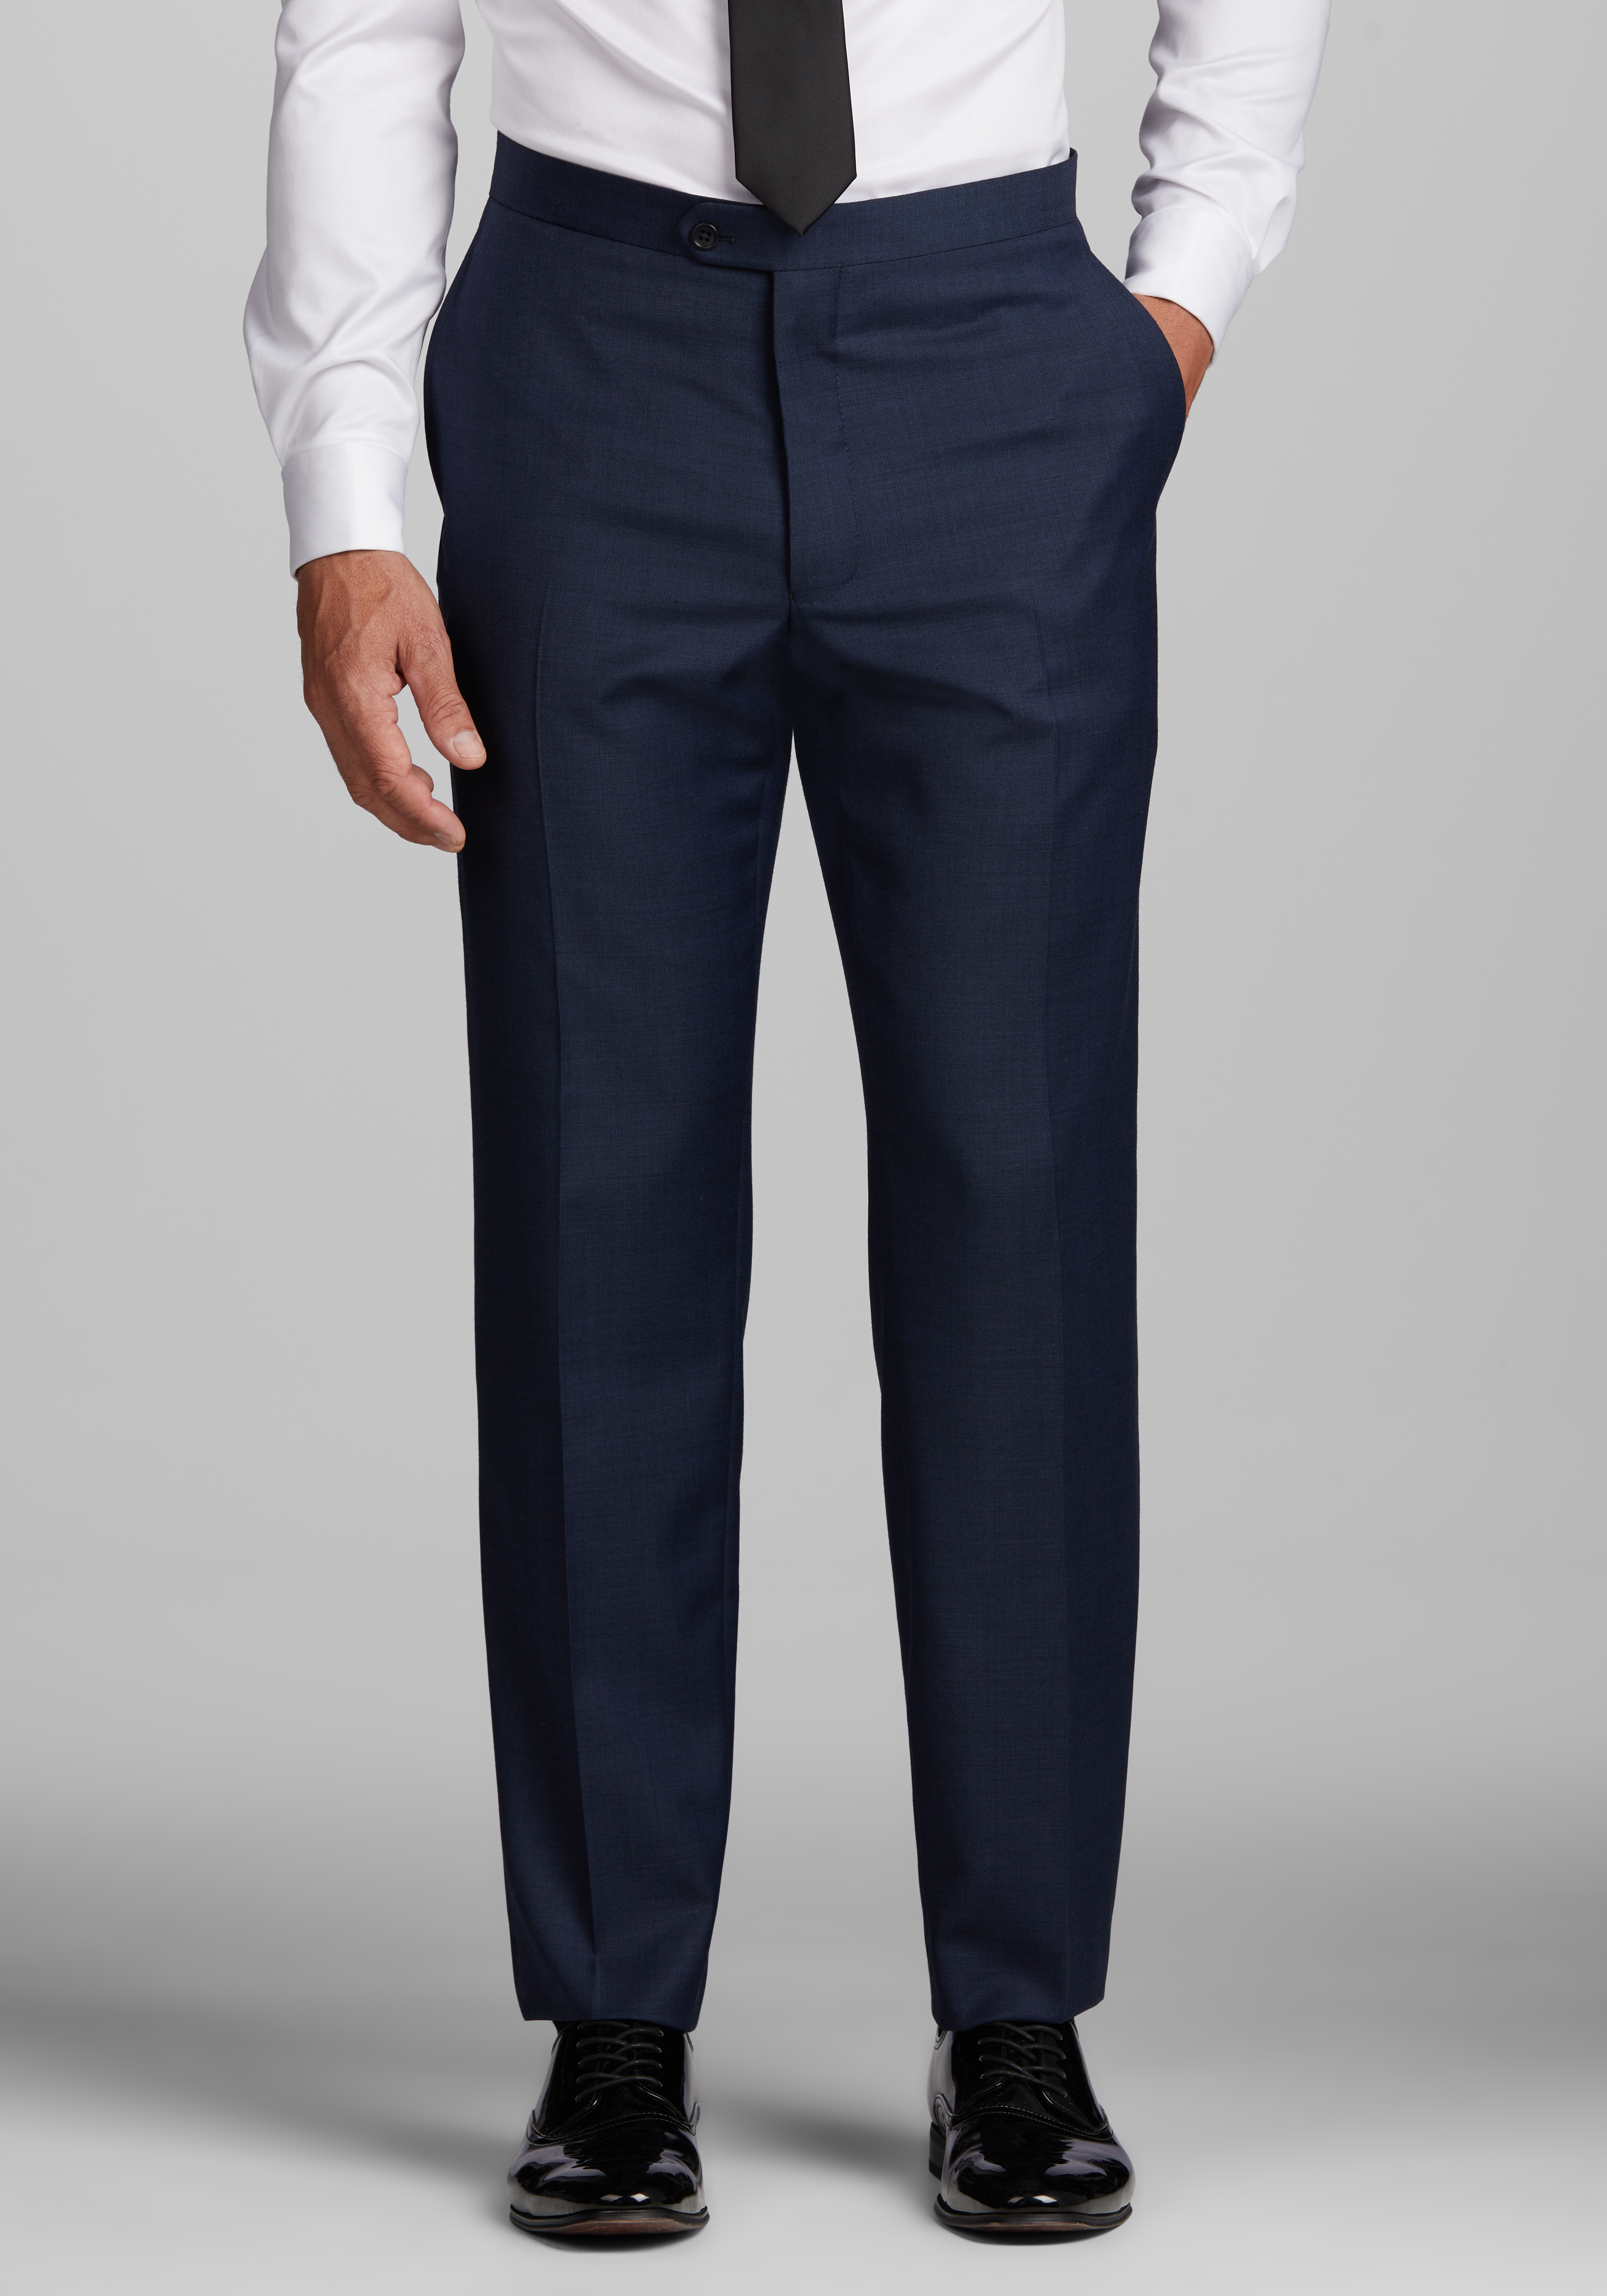 Tuxedos & Formalwear, Shop Men's Formal Suit Attire